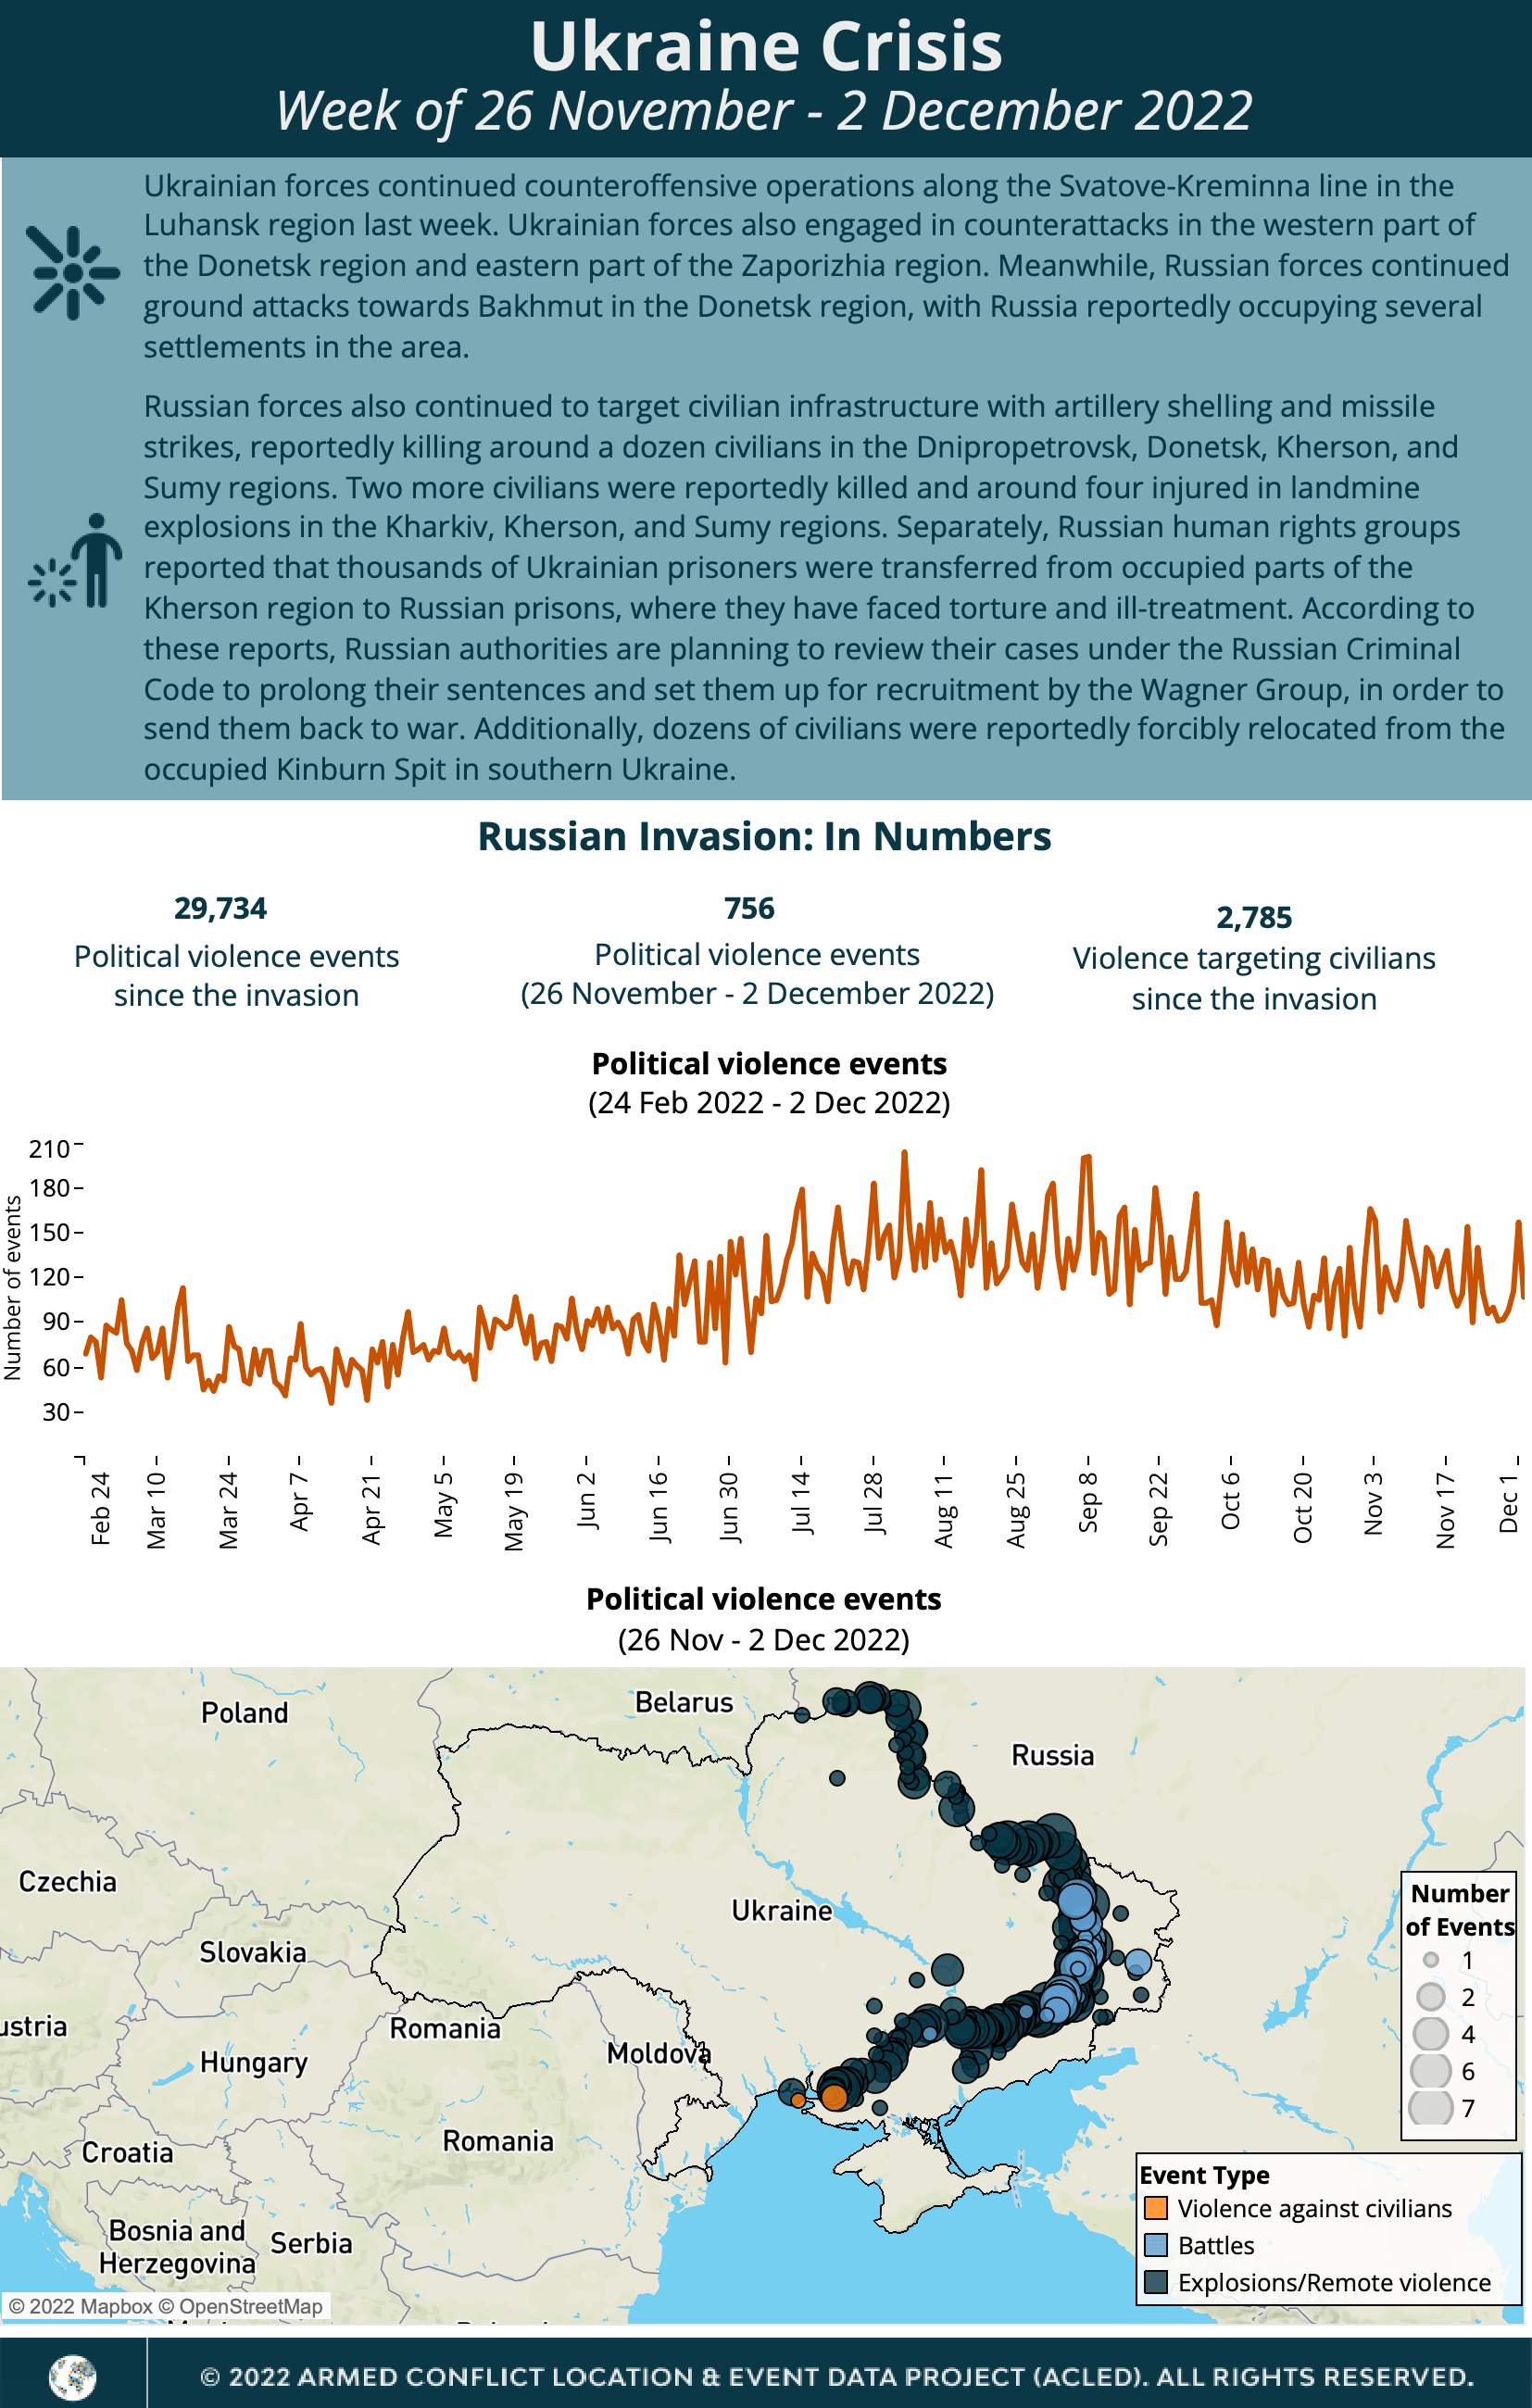 Ukraine Crisis Response Page